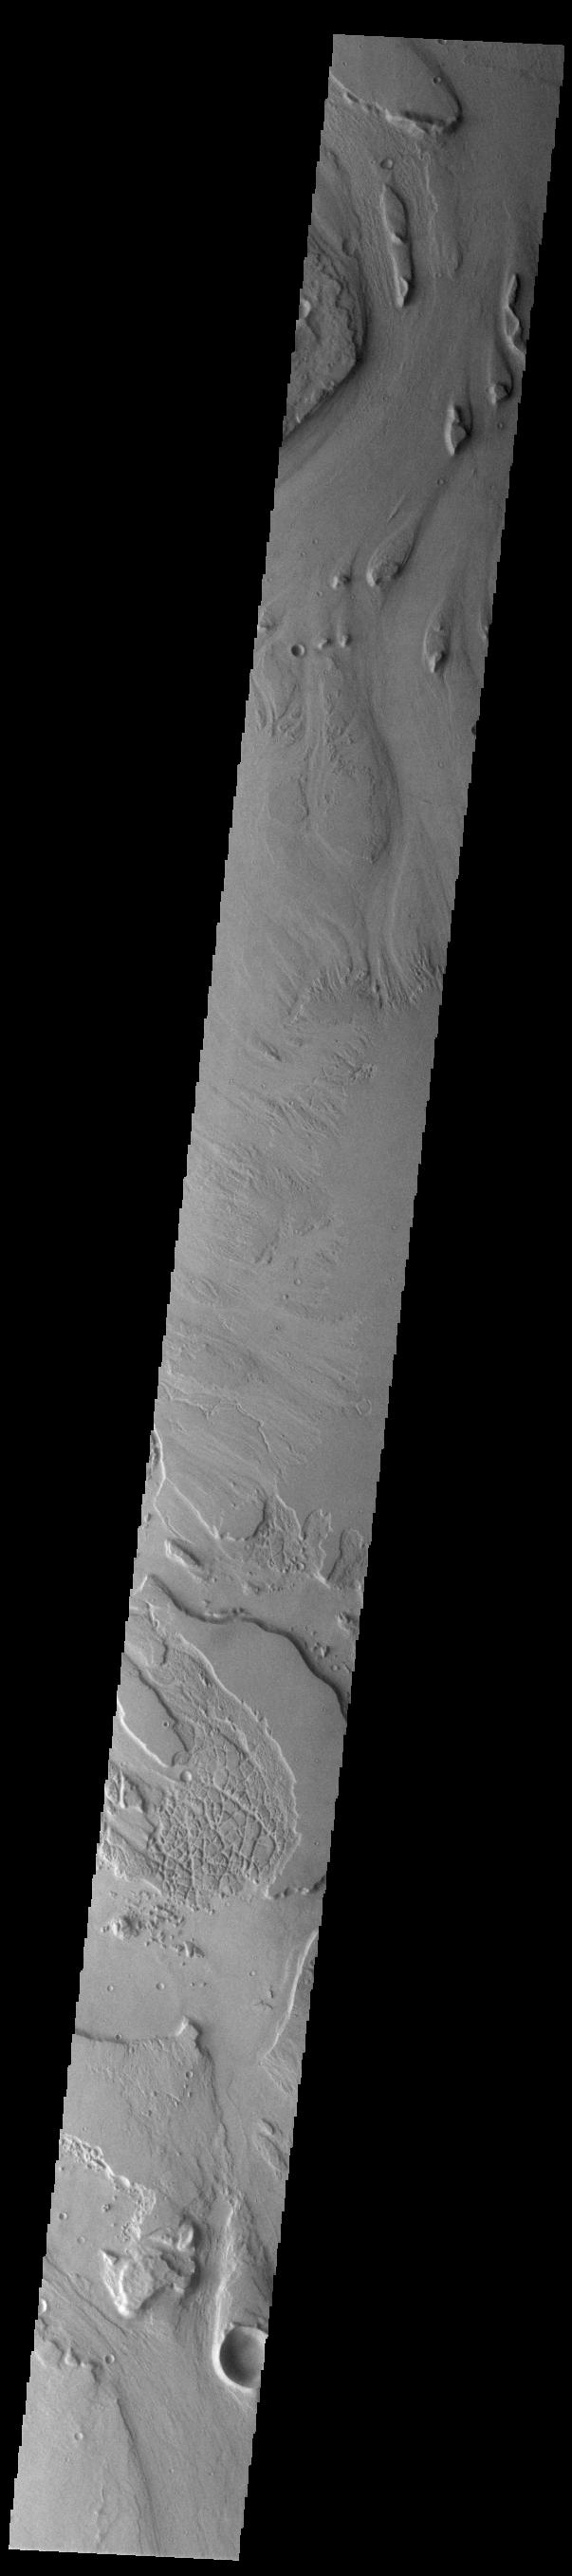 PIA24411: Mangala Valles